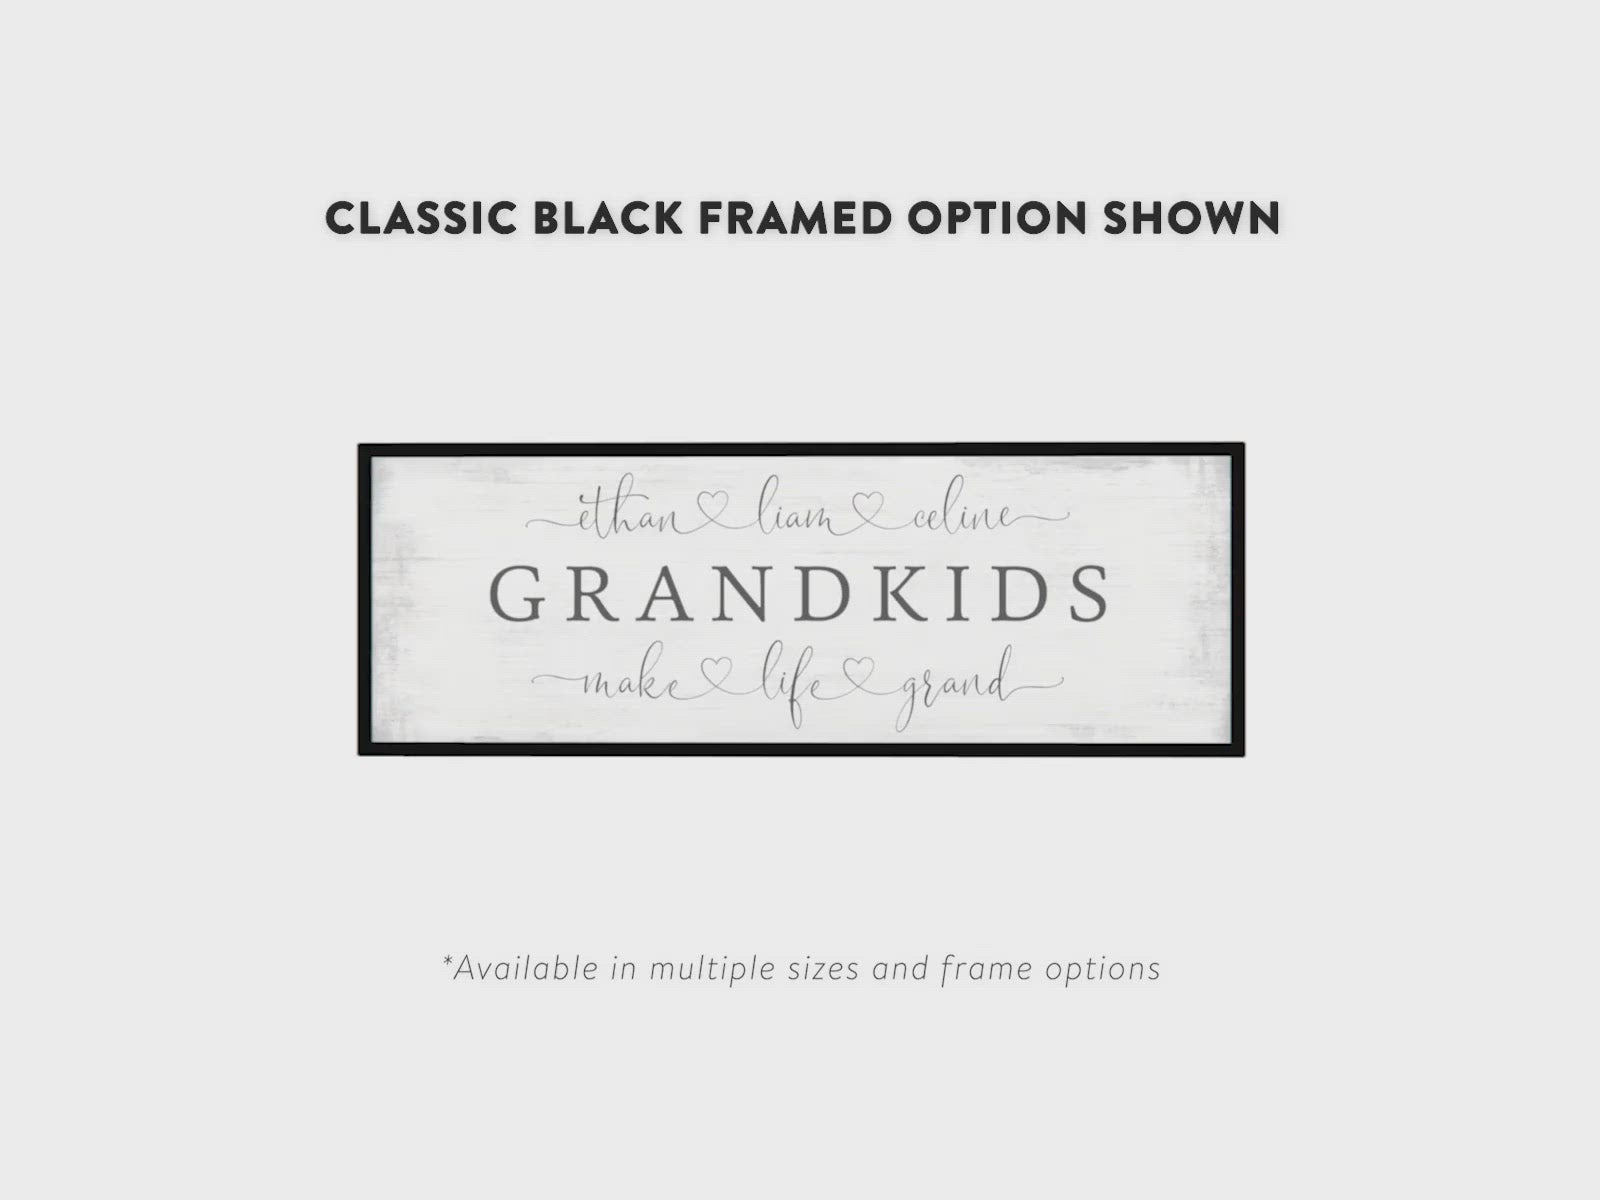 Grandkids Make Life Grand Personalized Name Sign Product Video - Pretty Perfect Studio